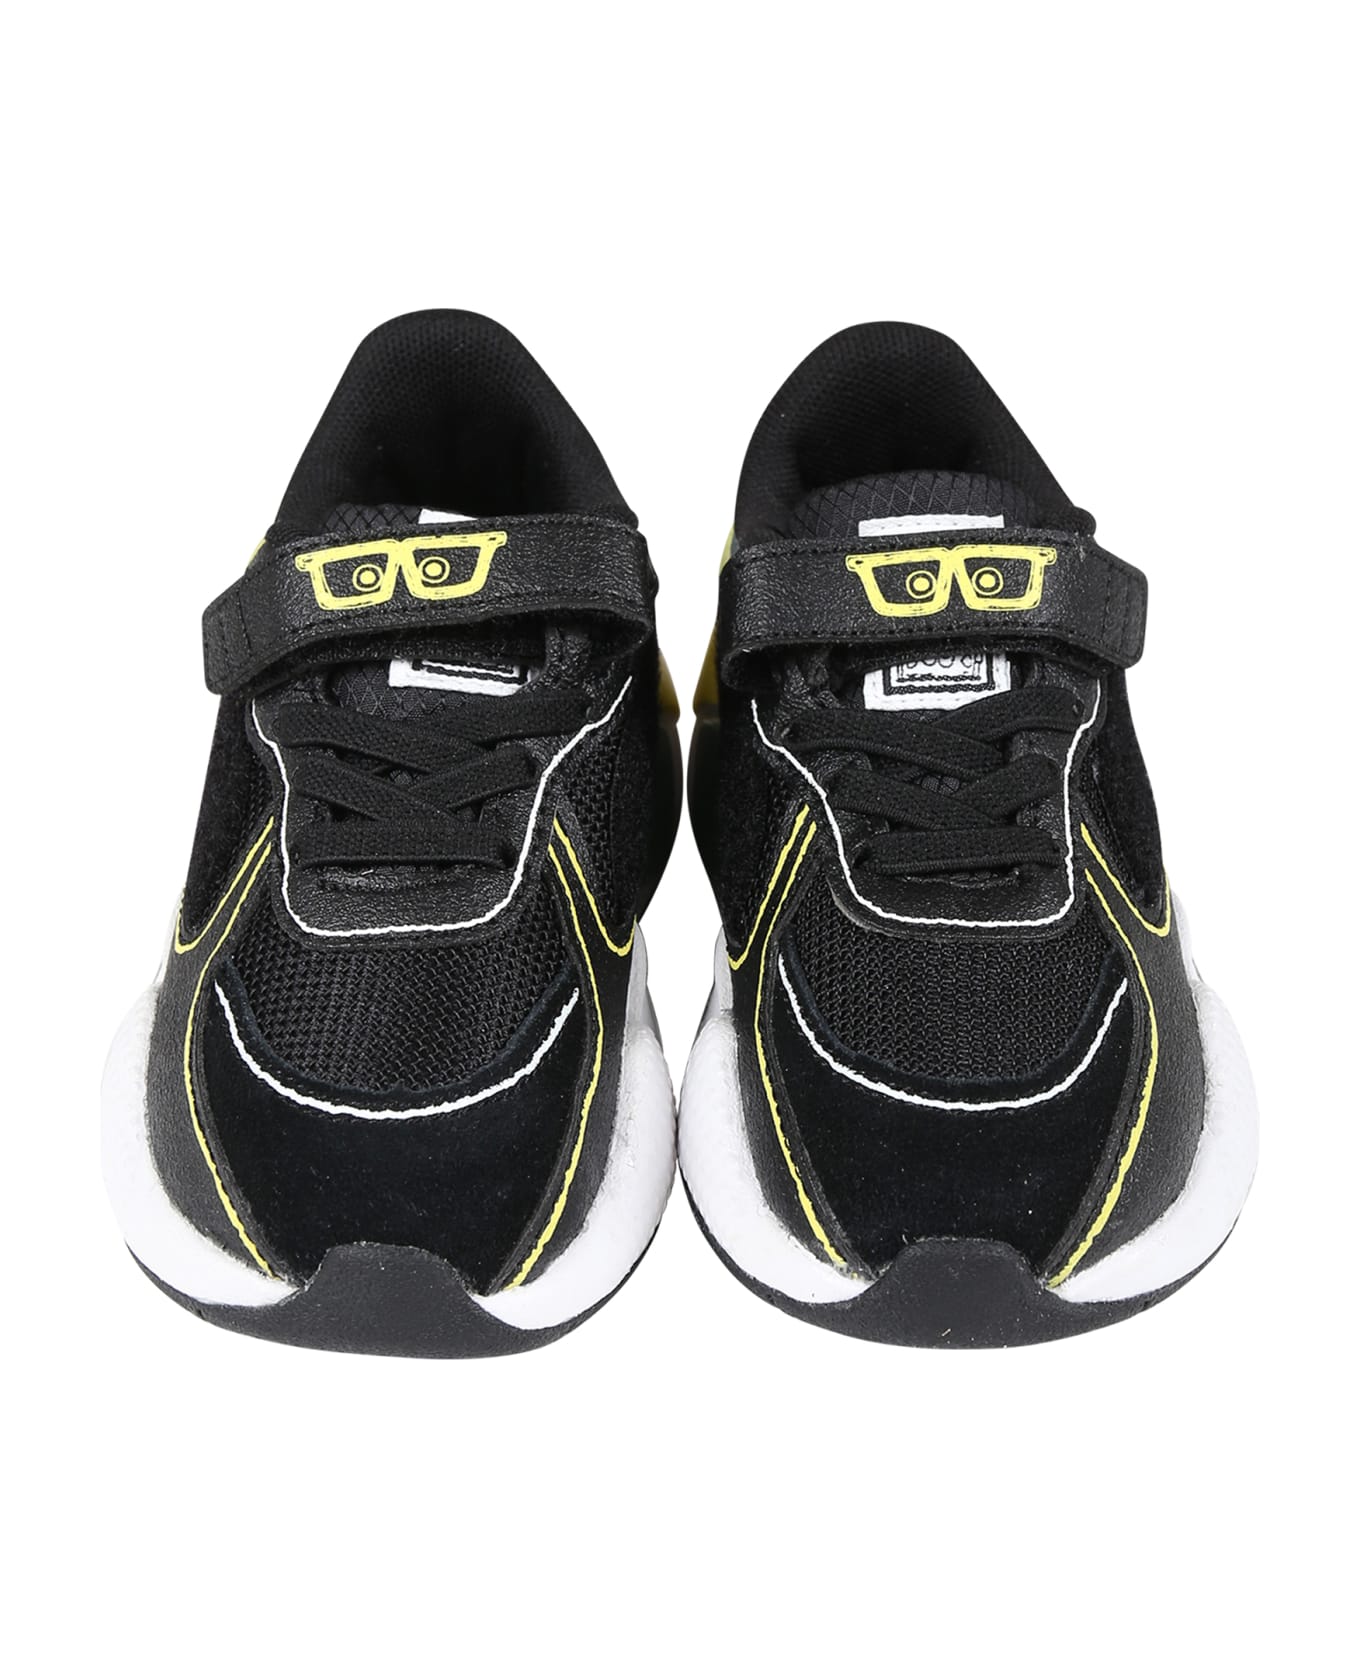 Puma Multicolor Sneakers For Boy With Logo - Black シューズ